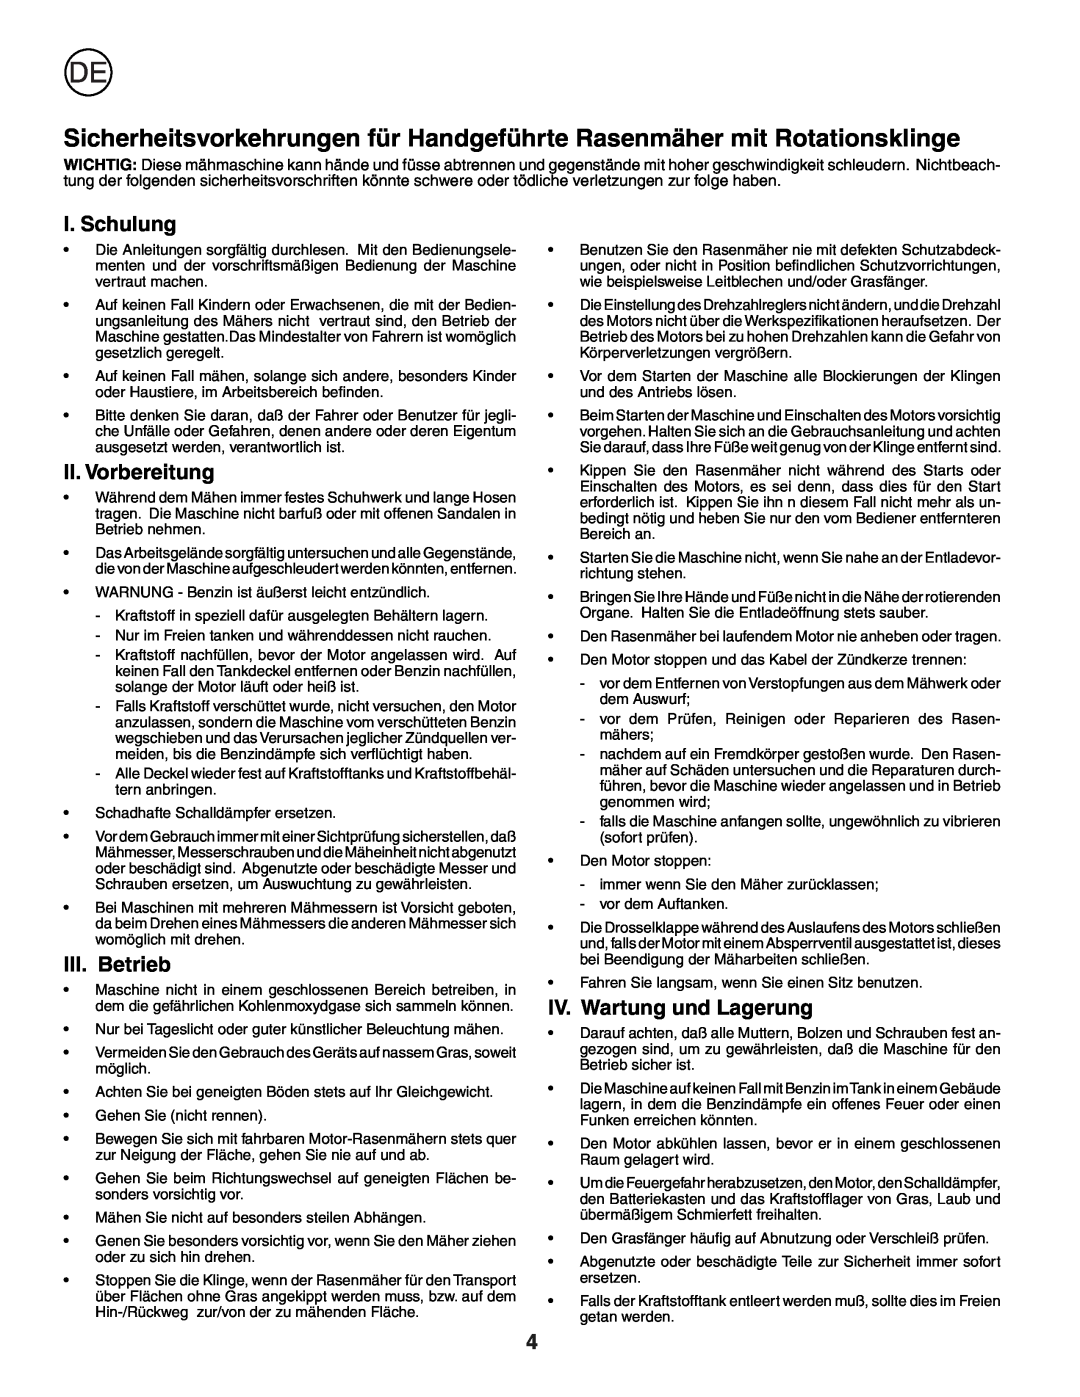 Husqvarna R52SE instruction manual I. Schulung, II. Vorbereitung, III. Betrieb, IV. Wartung und Lagerung 